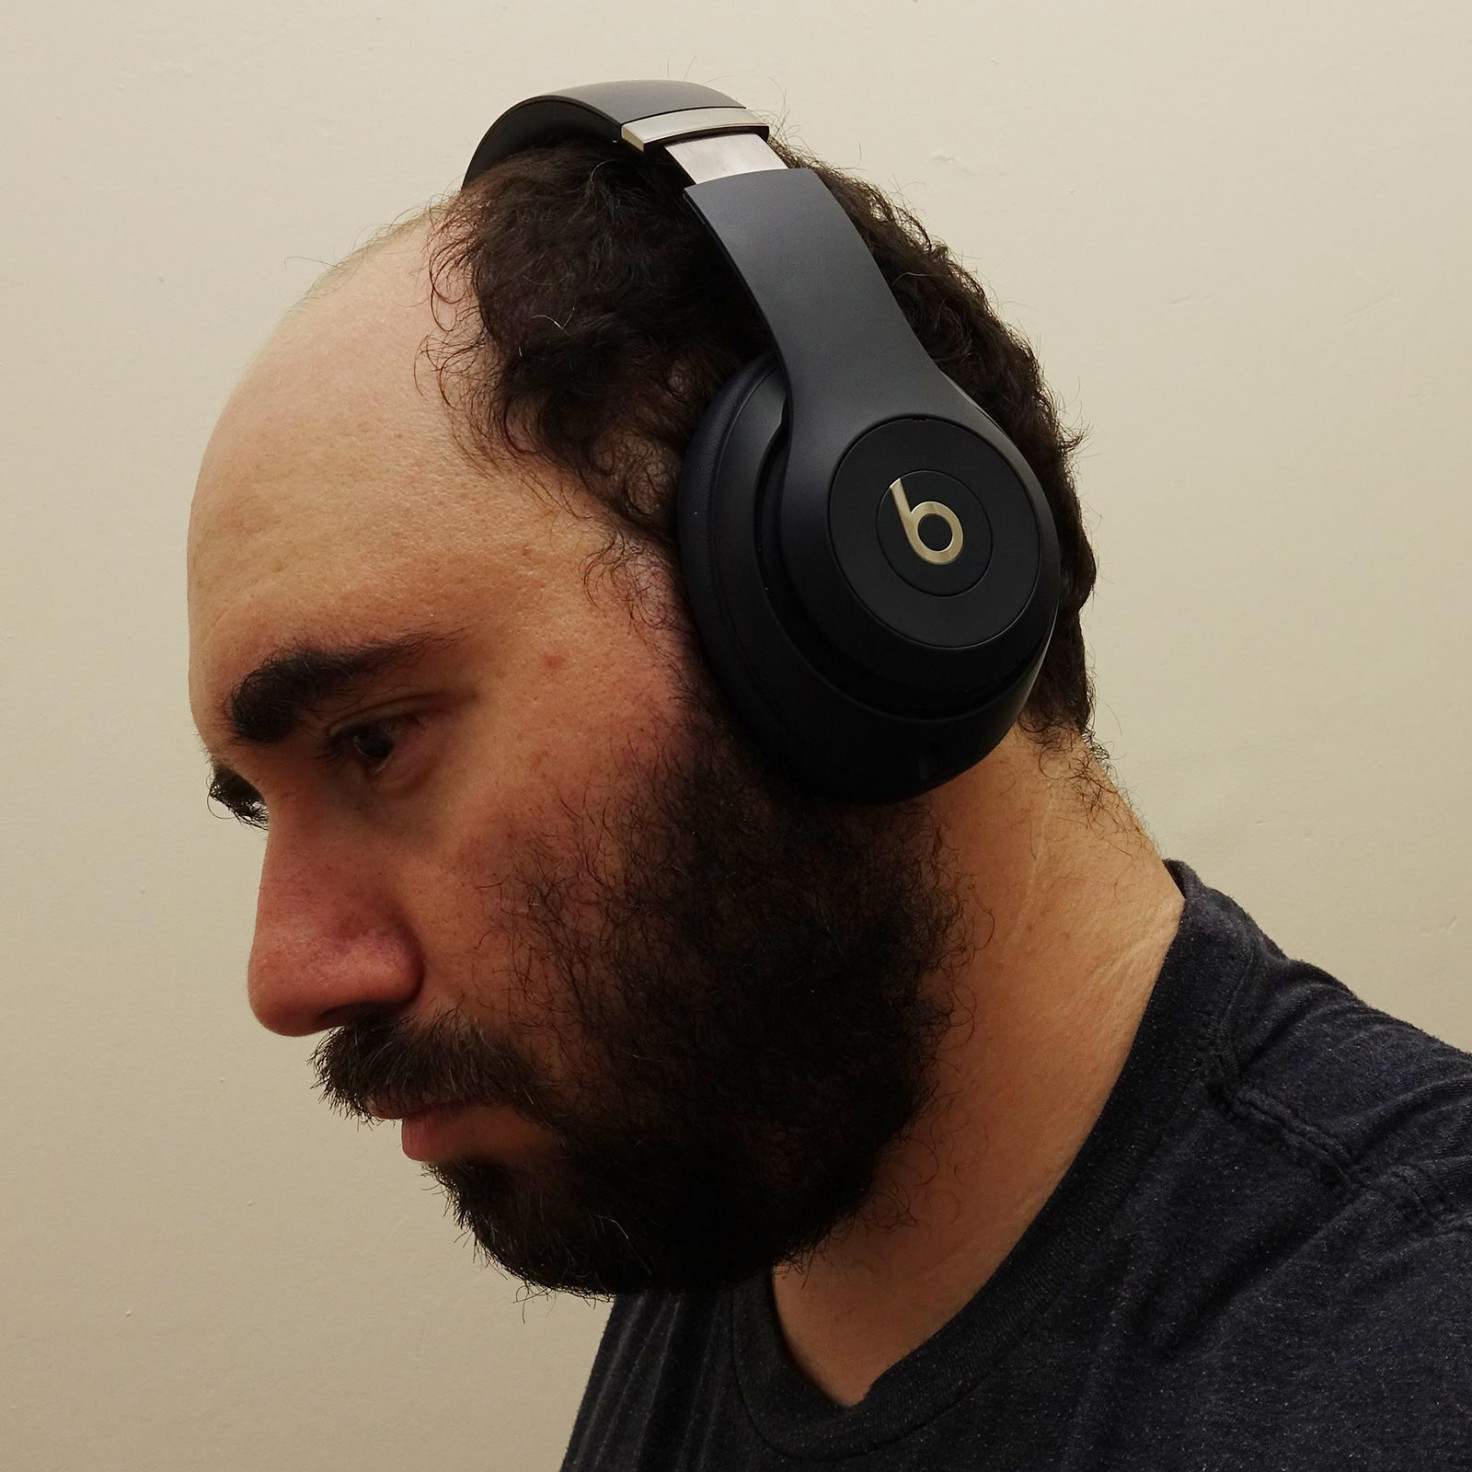 Review Beats Studio 3 Wireless noisecancellation headphones Pickr